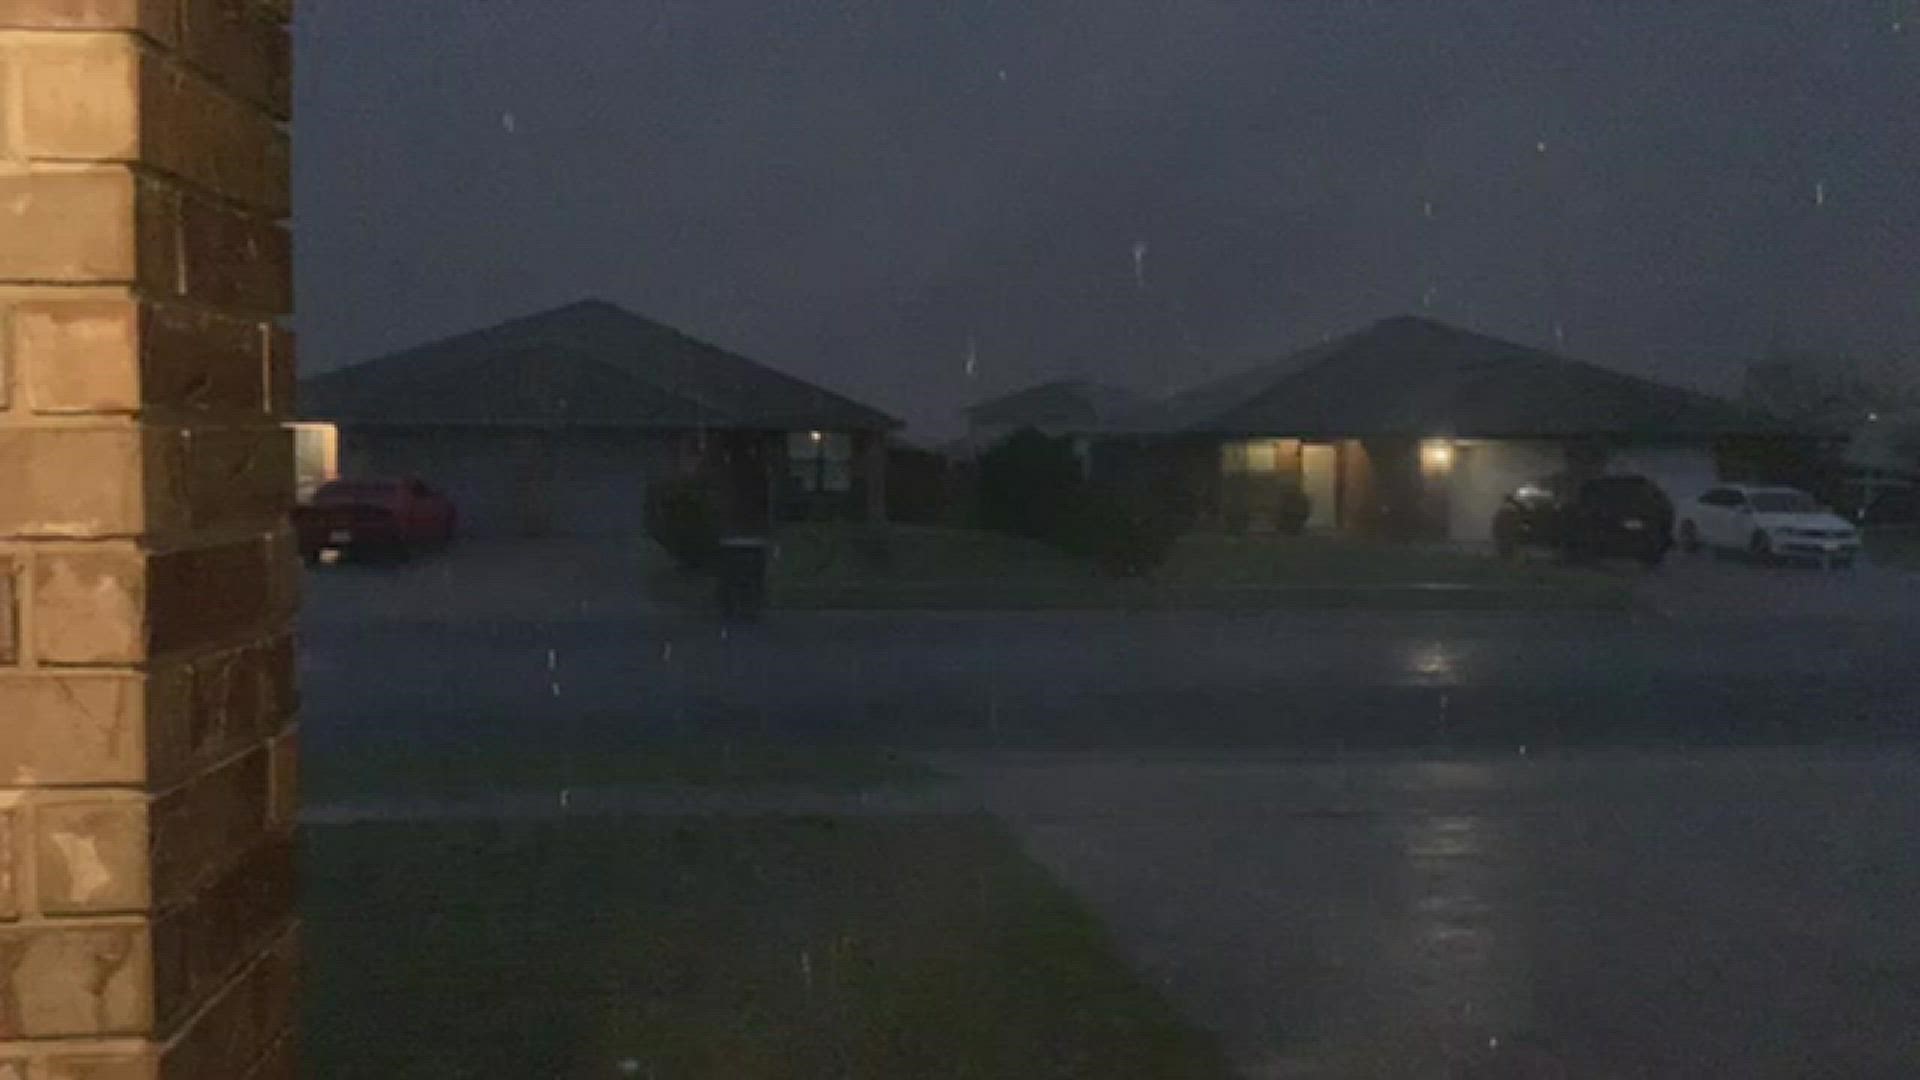 VIDEO Tornado sirens go off in Killeen